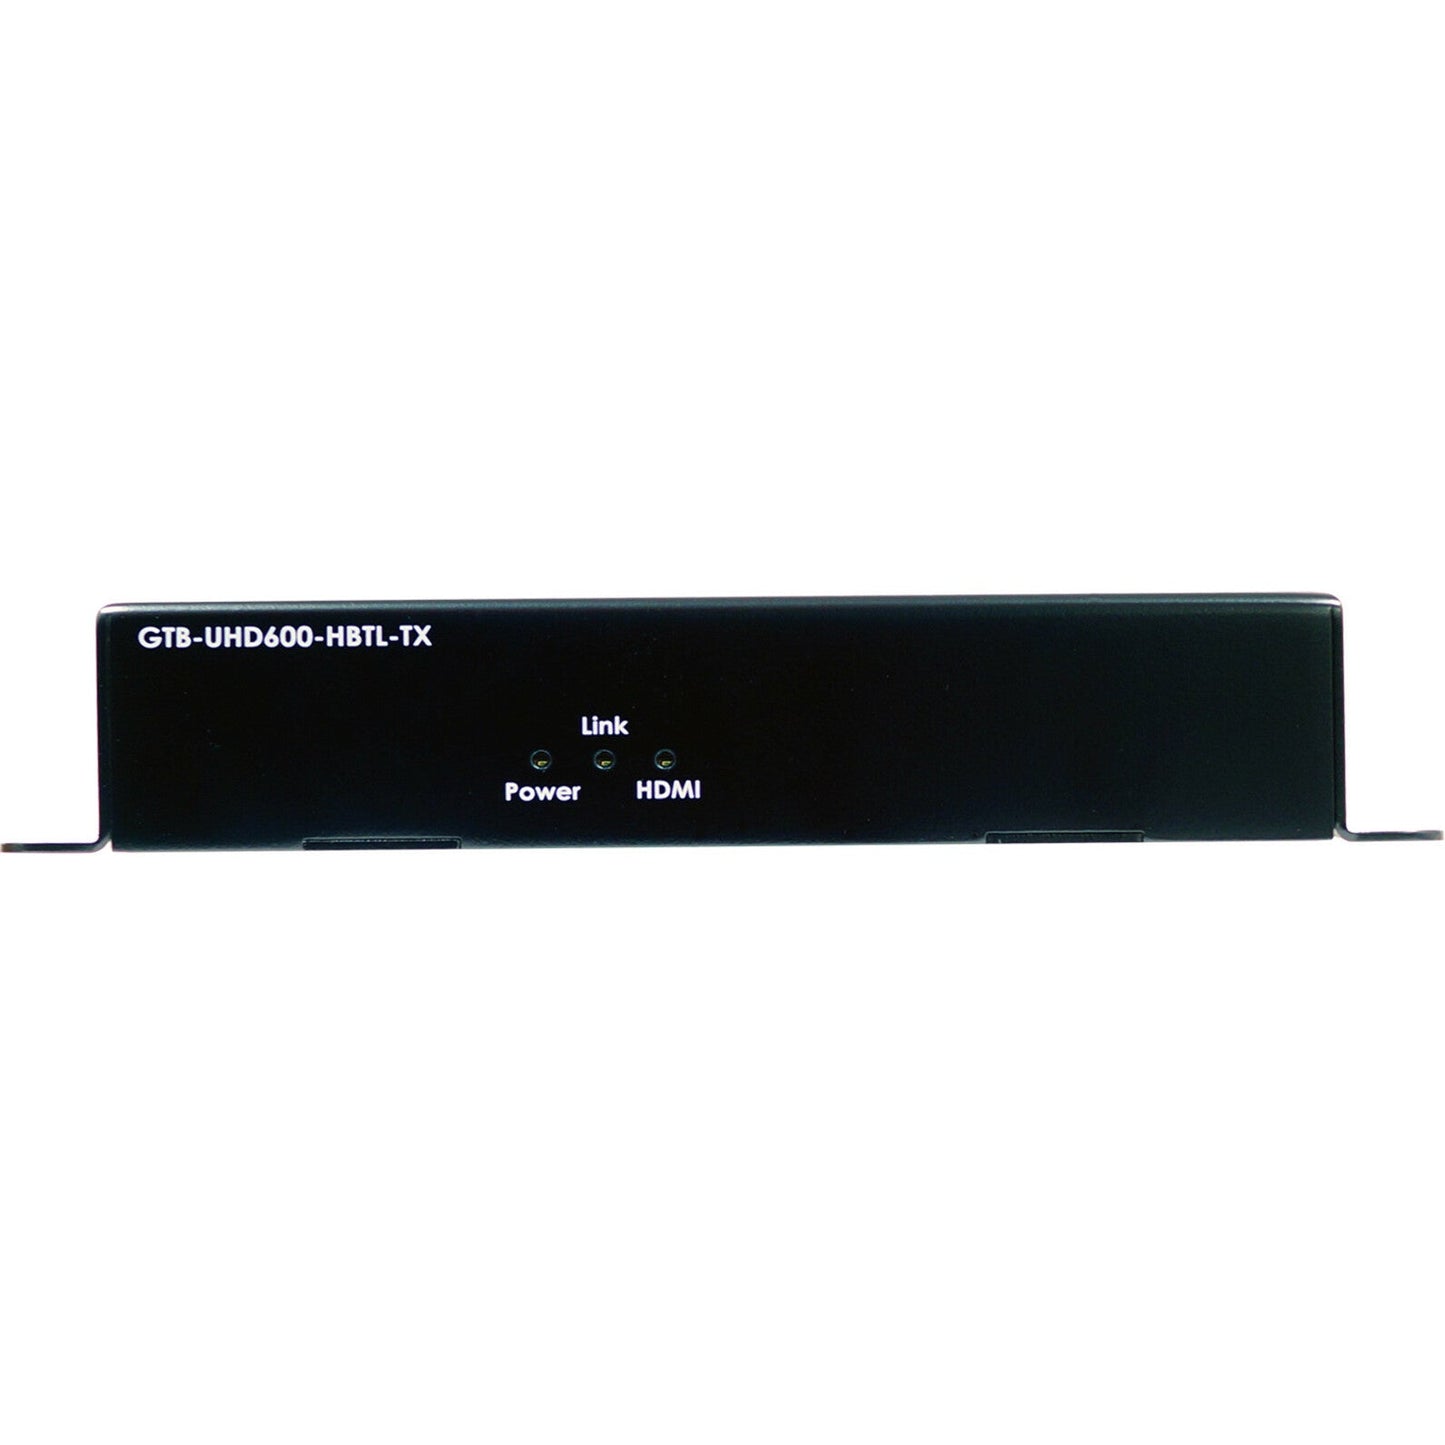 Gefen 4K Ultra HD 600 MHz HDBaseT Extender w/ HDR 2-Way IR And POL